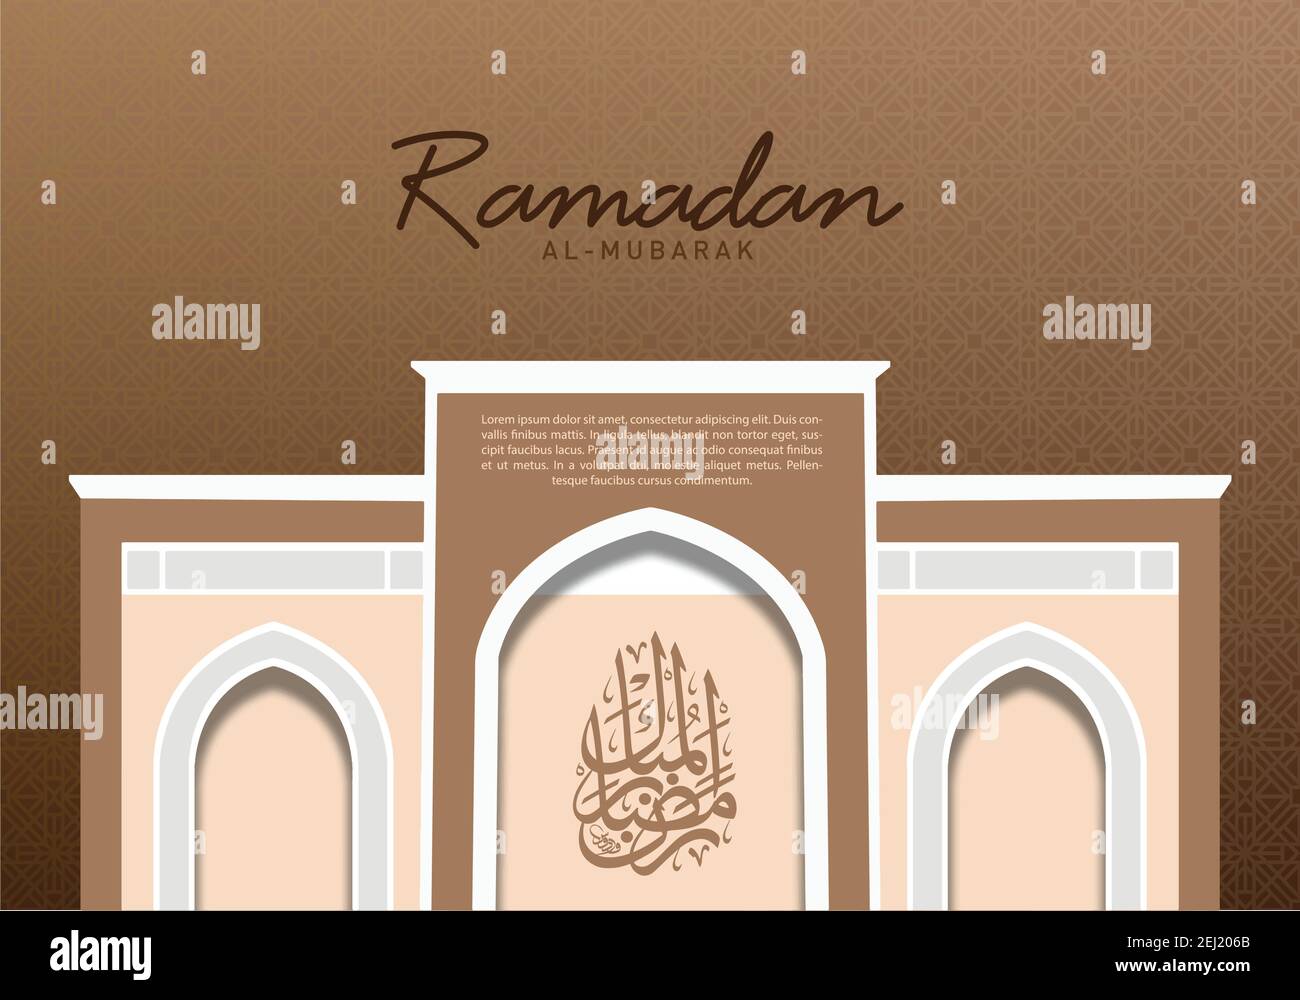 Ramadan al-Mubarak greeting card. Mosque interior art concept, 'Blessed Ramadan' in Arabic Calligraphy, sample text and geometric pattern background. Stock Vector